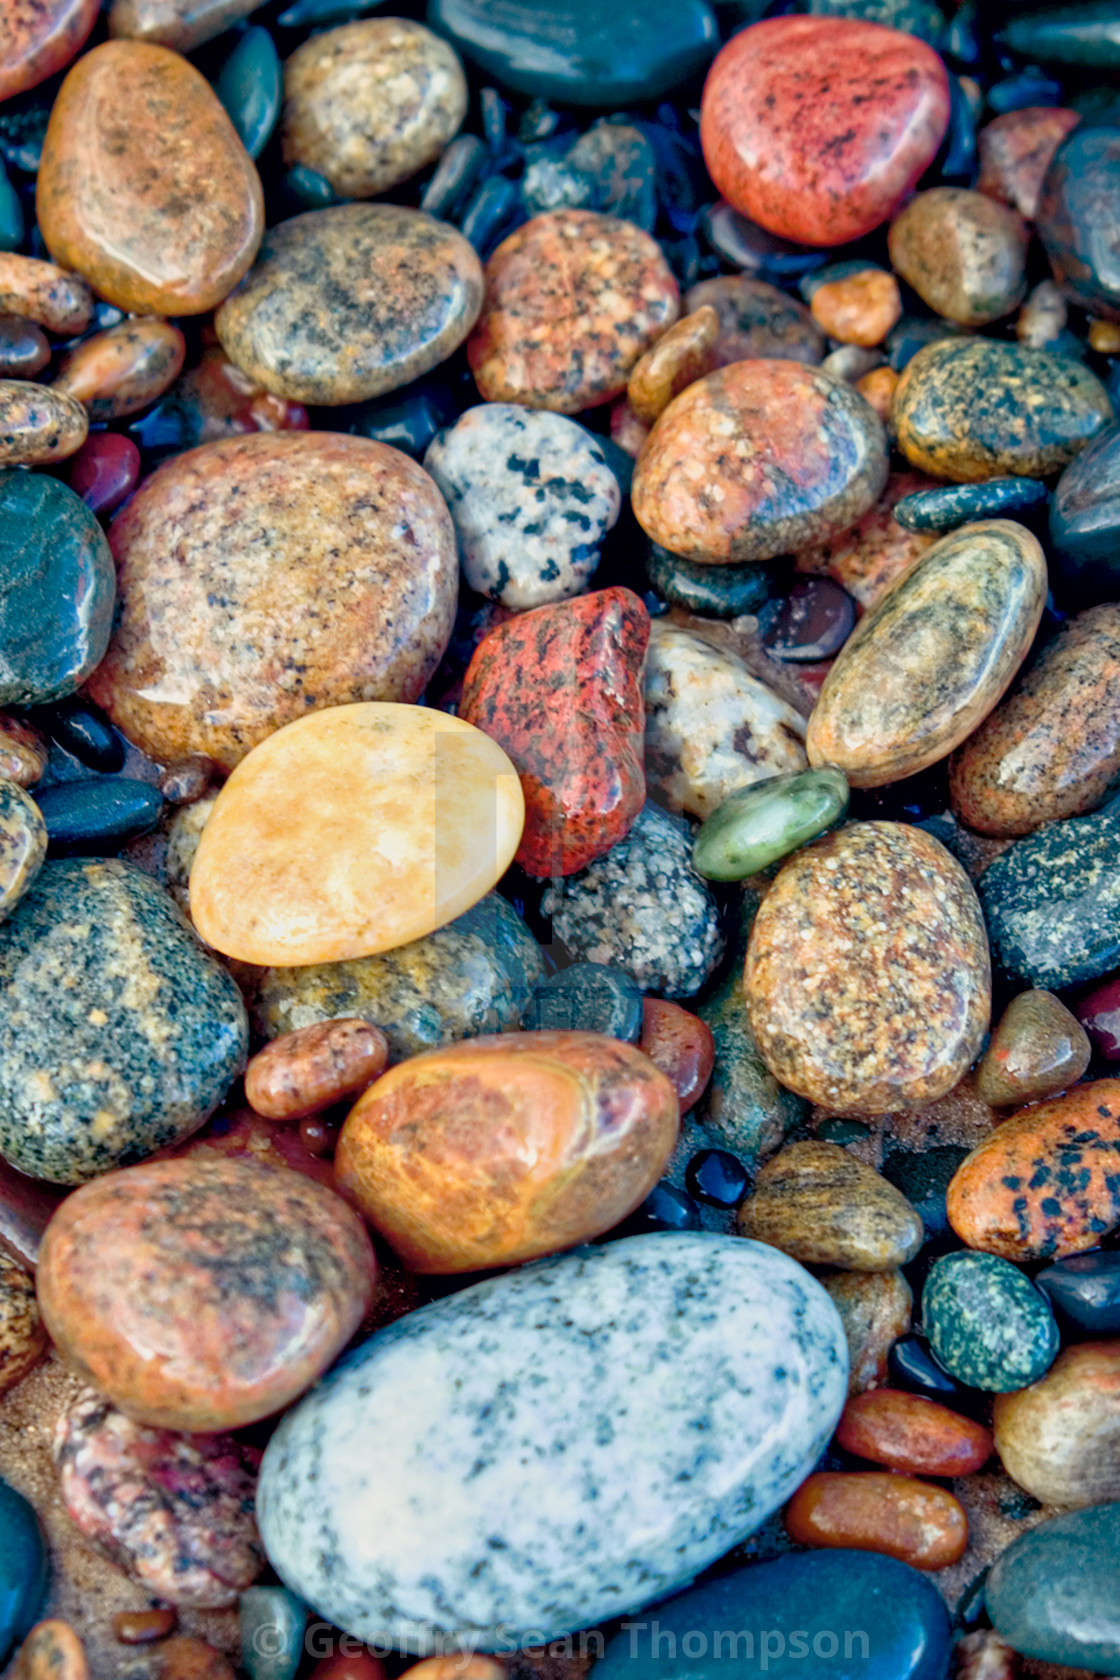 "Pebbles" stock image